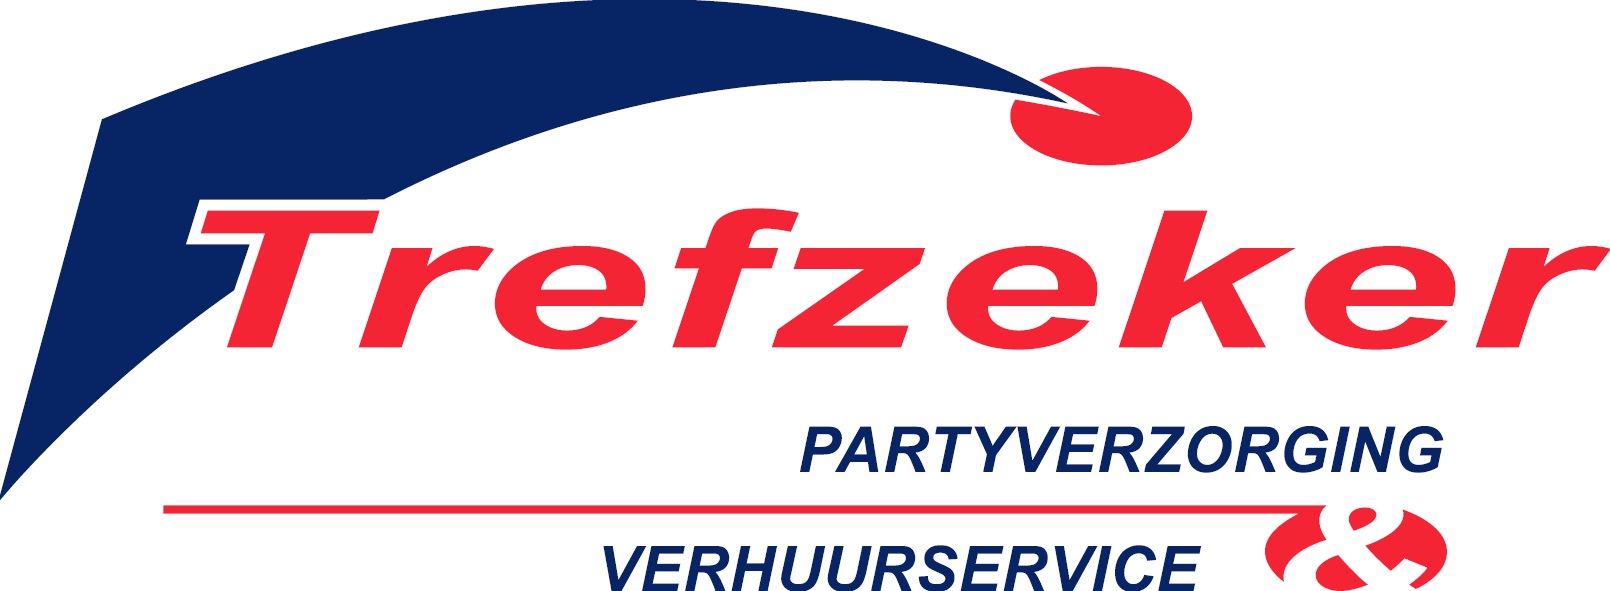 Logo Trefzeker